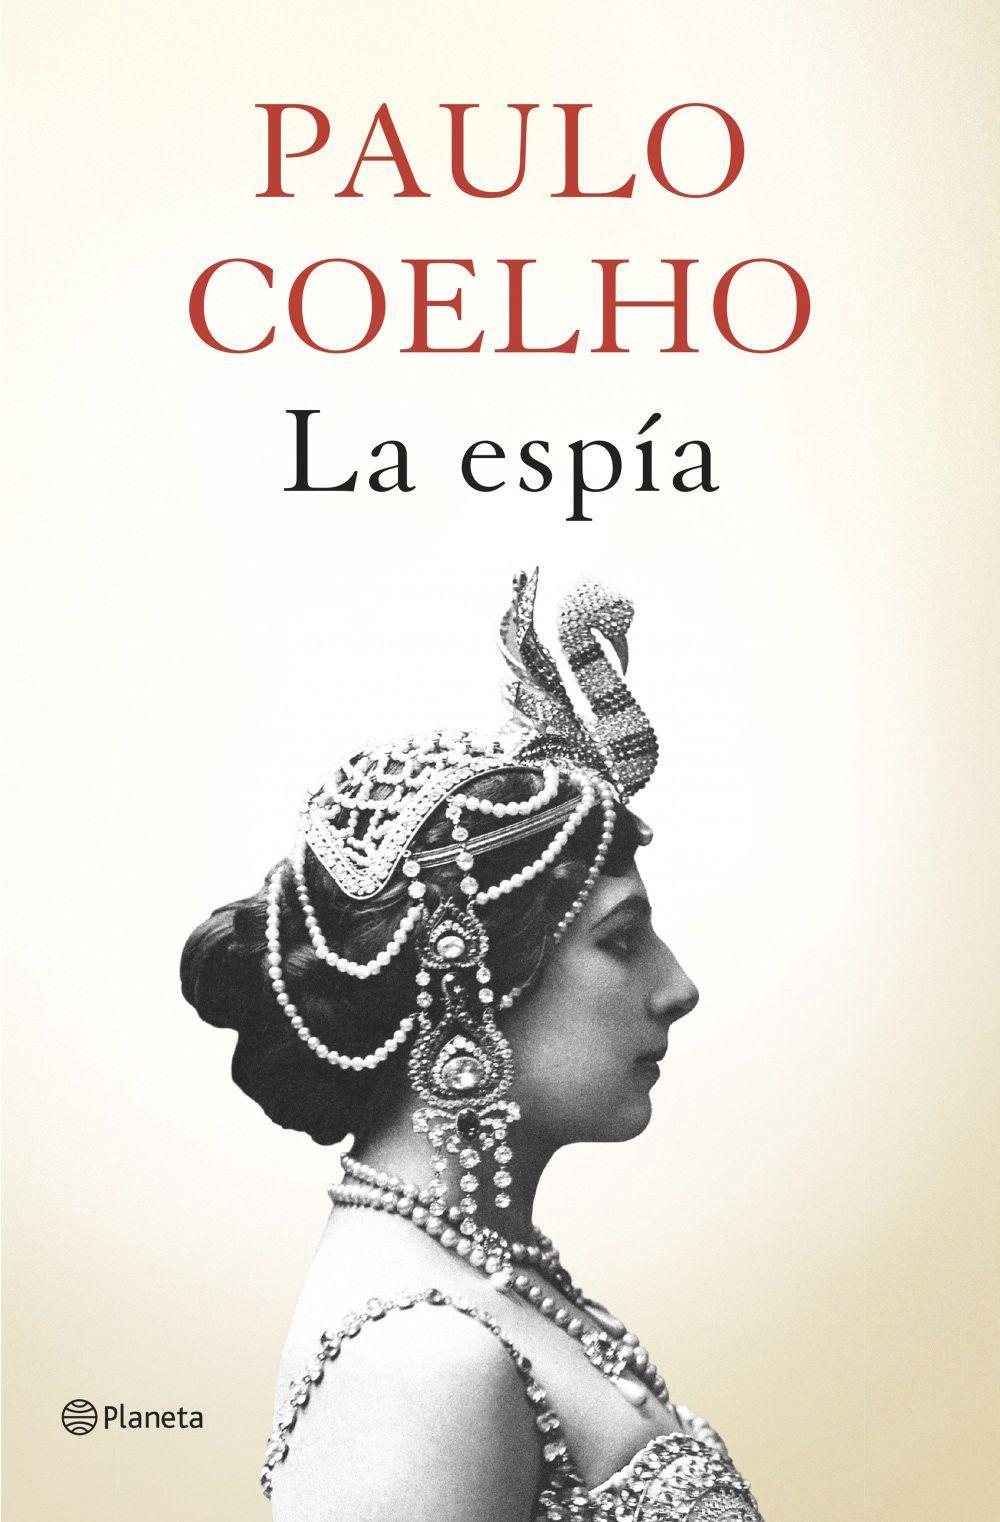 La espía | Paulo Coelho | Taschenbuch | 213 S. | Spanisch | 2016 | Editorial Planeta, S.A. | EAN 9788408161806 - Coelho, Paulo